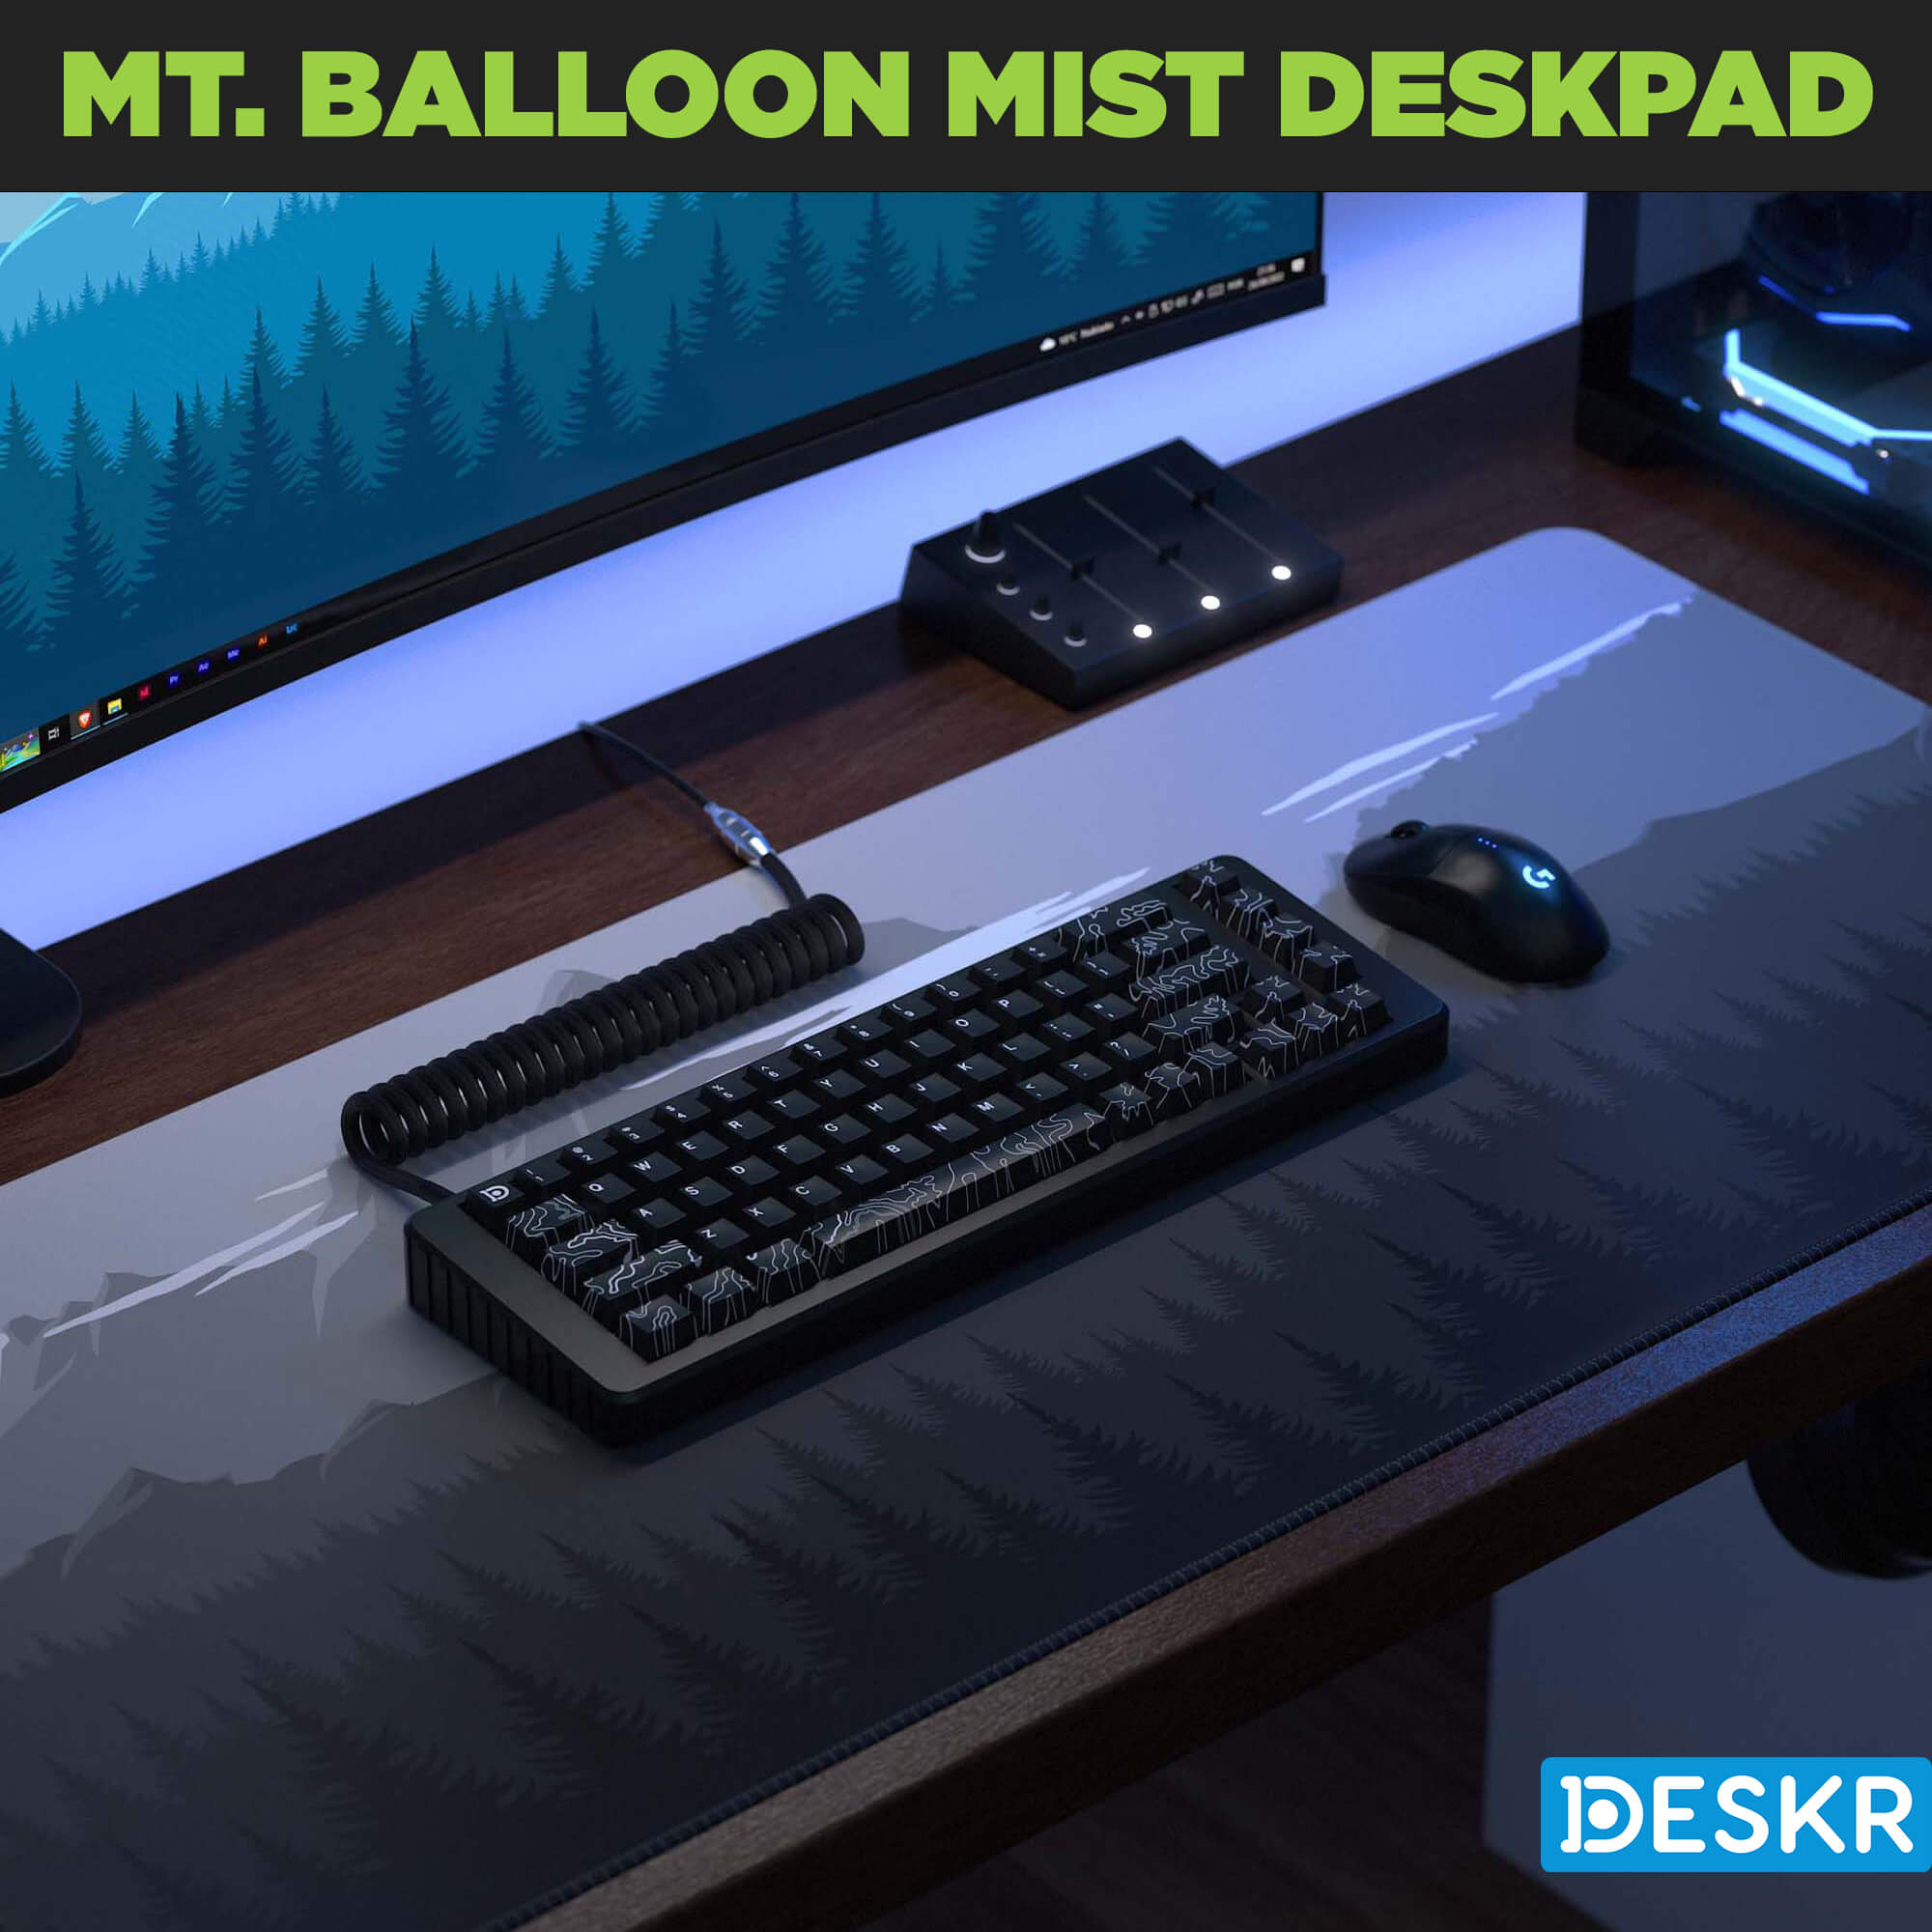 Deskr Mt. Balloon Mist Deskpad shown on gaming desk.